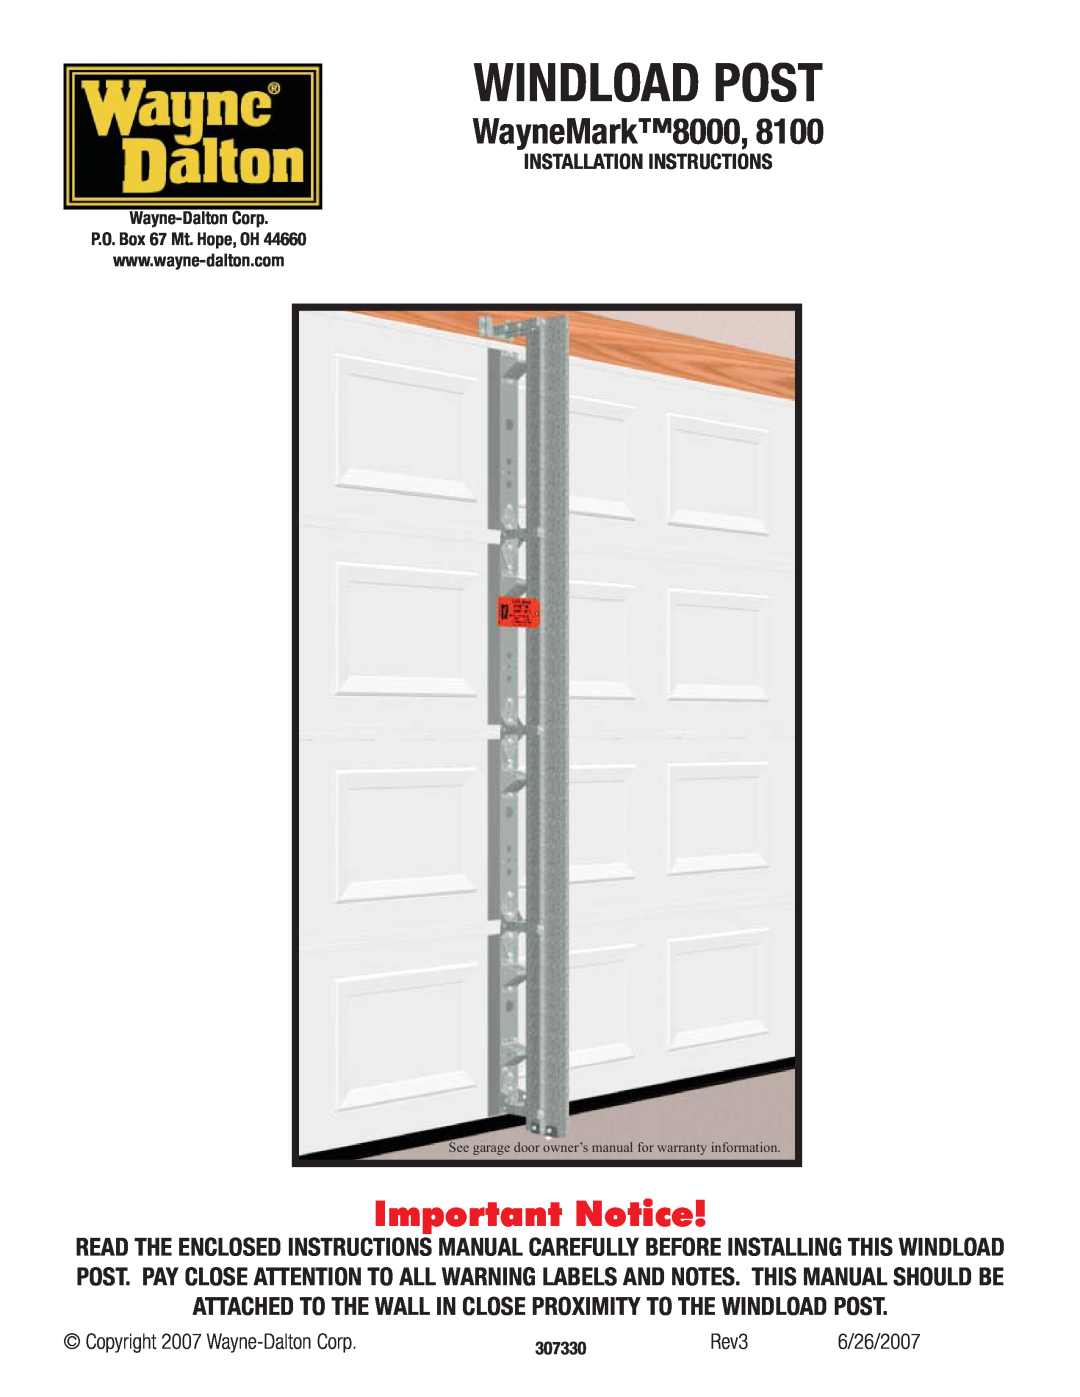 Wayne-Dalton installation instructions All Residential Door Models, 8000 & 9000 Series & Wood Doors, Tools Required 